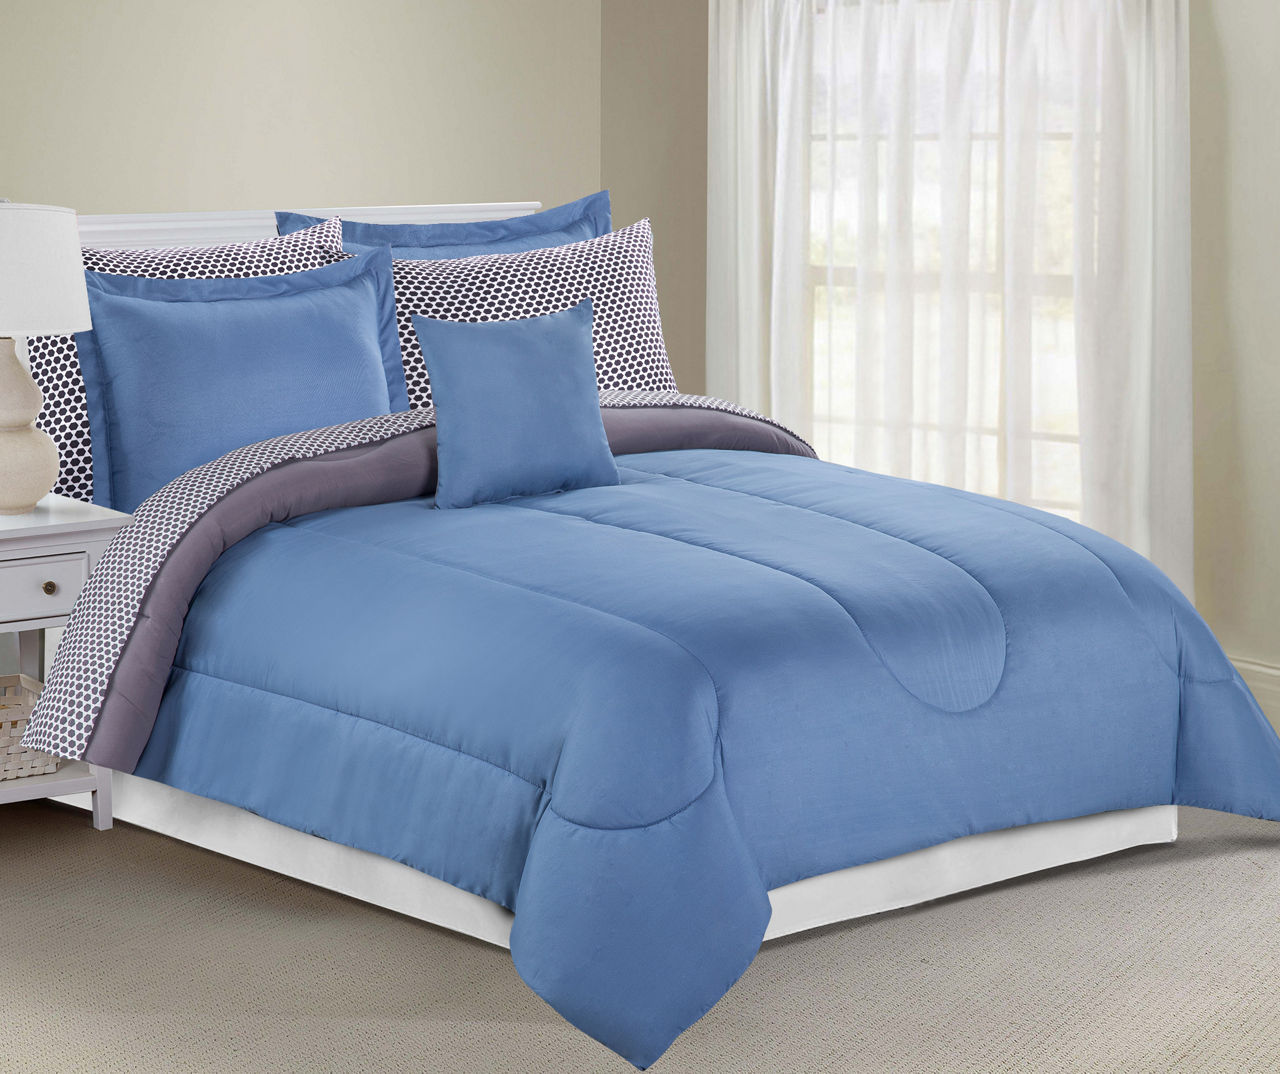 Solid Blue & Gray King 8-Piece Comforter Set